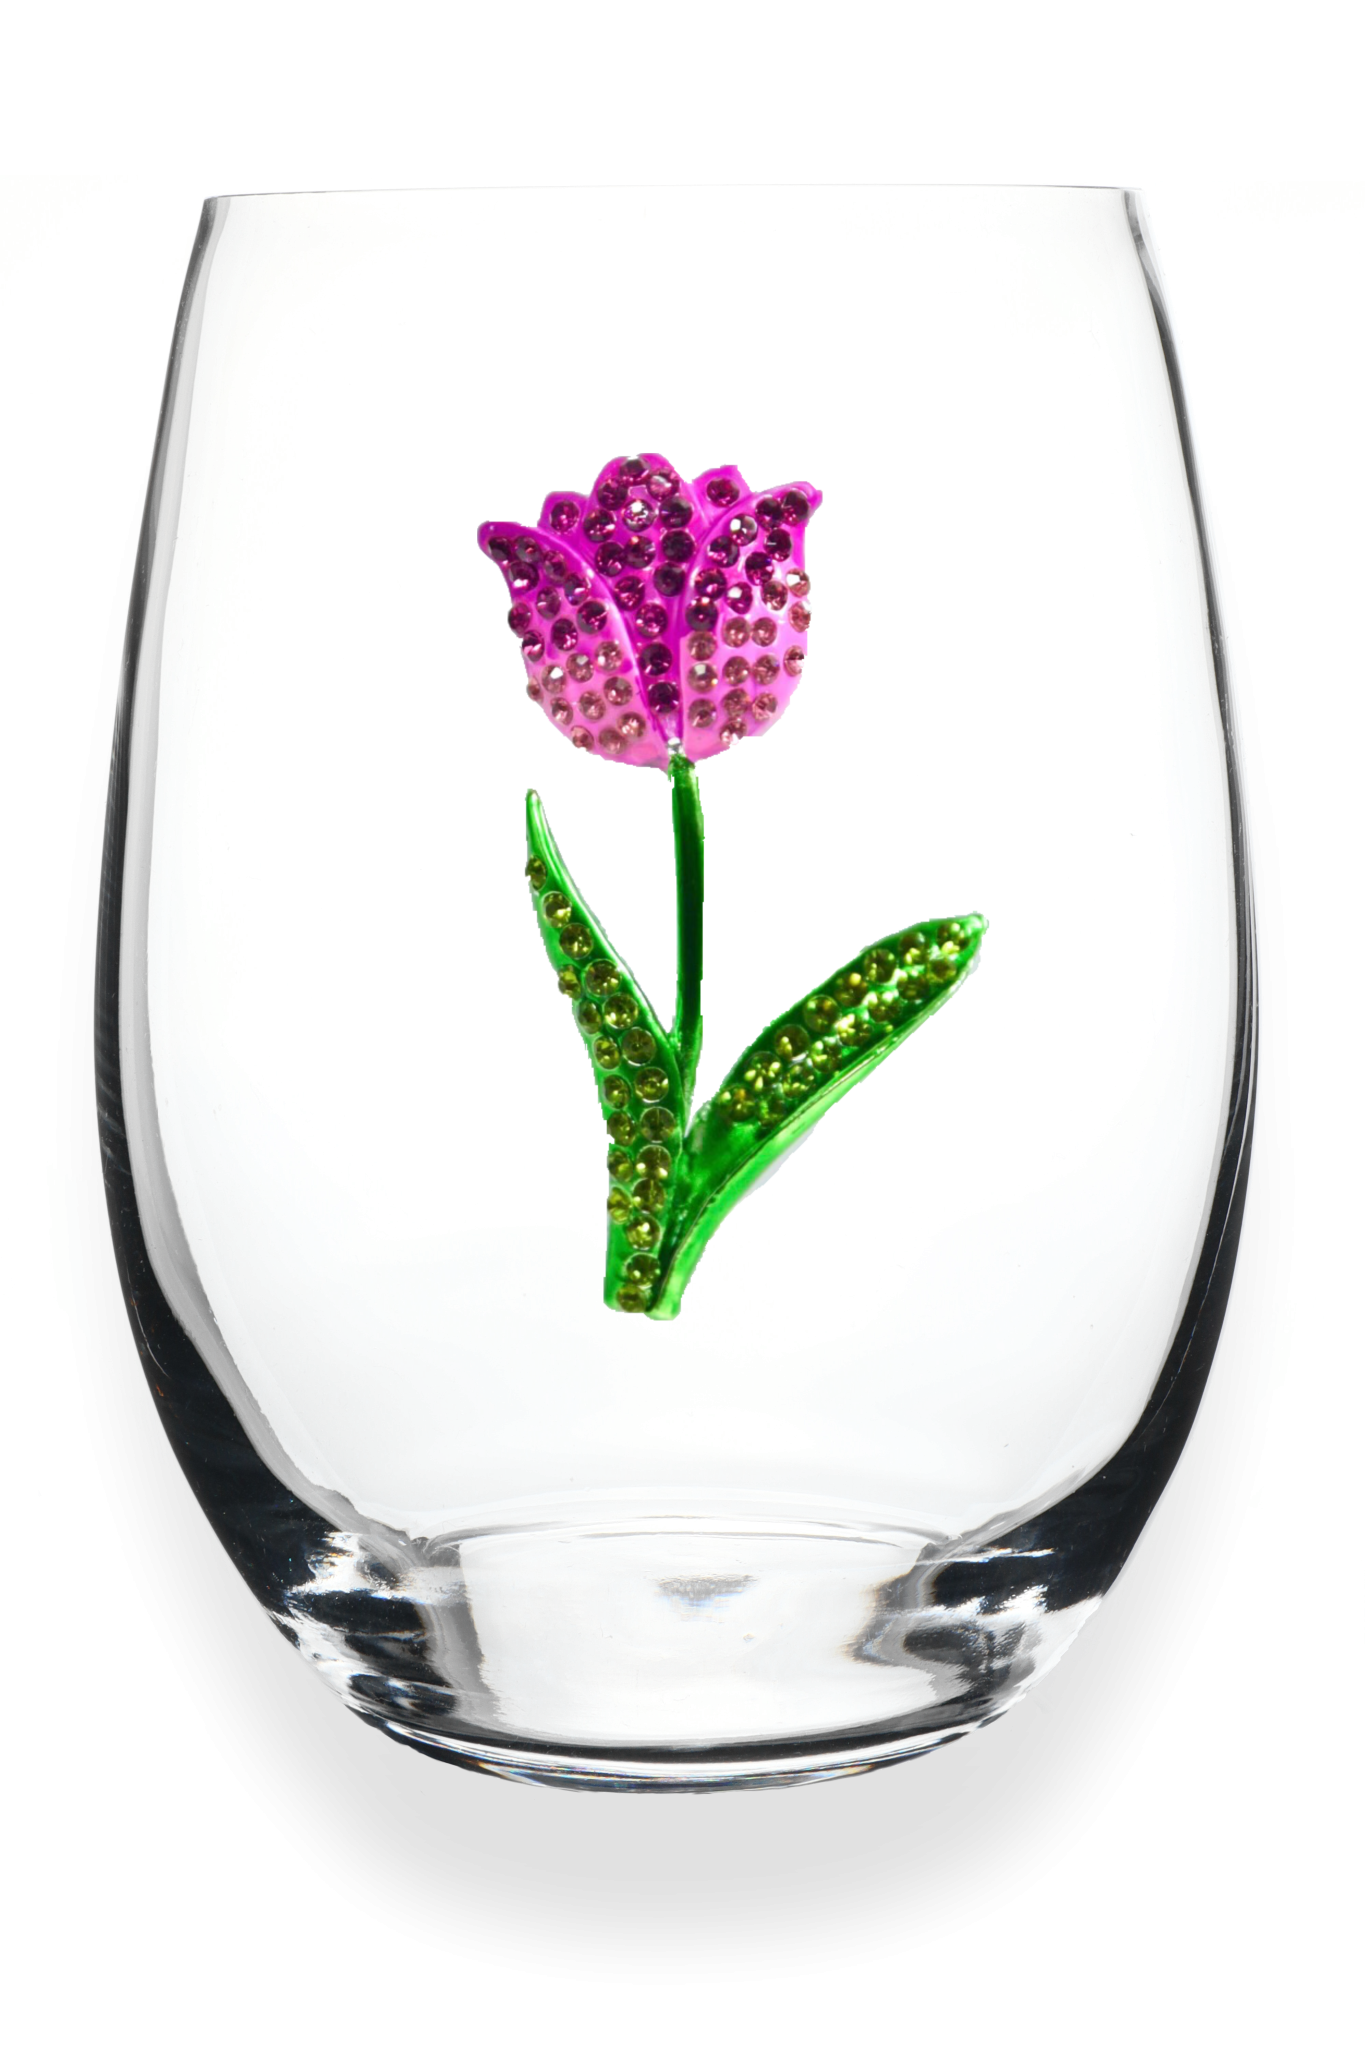 Jeweled Stemless Wine Glass - Every Day